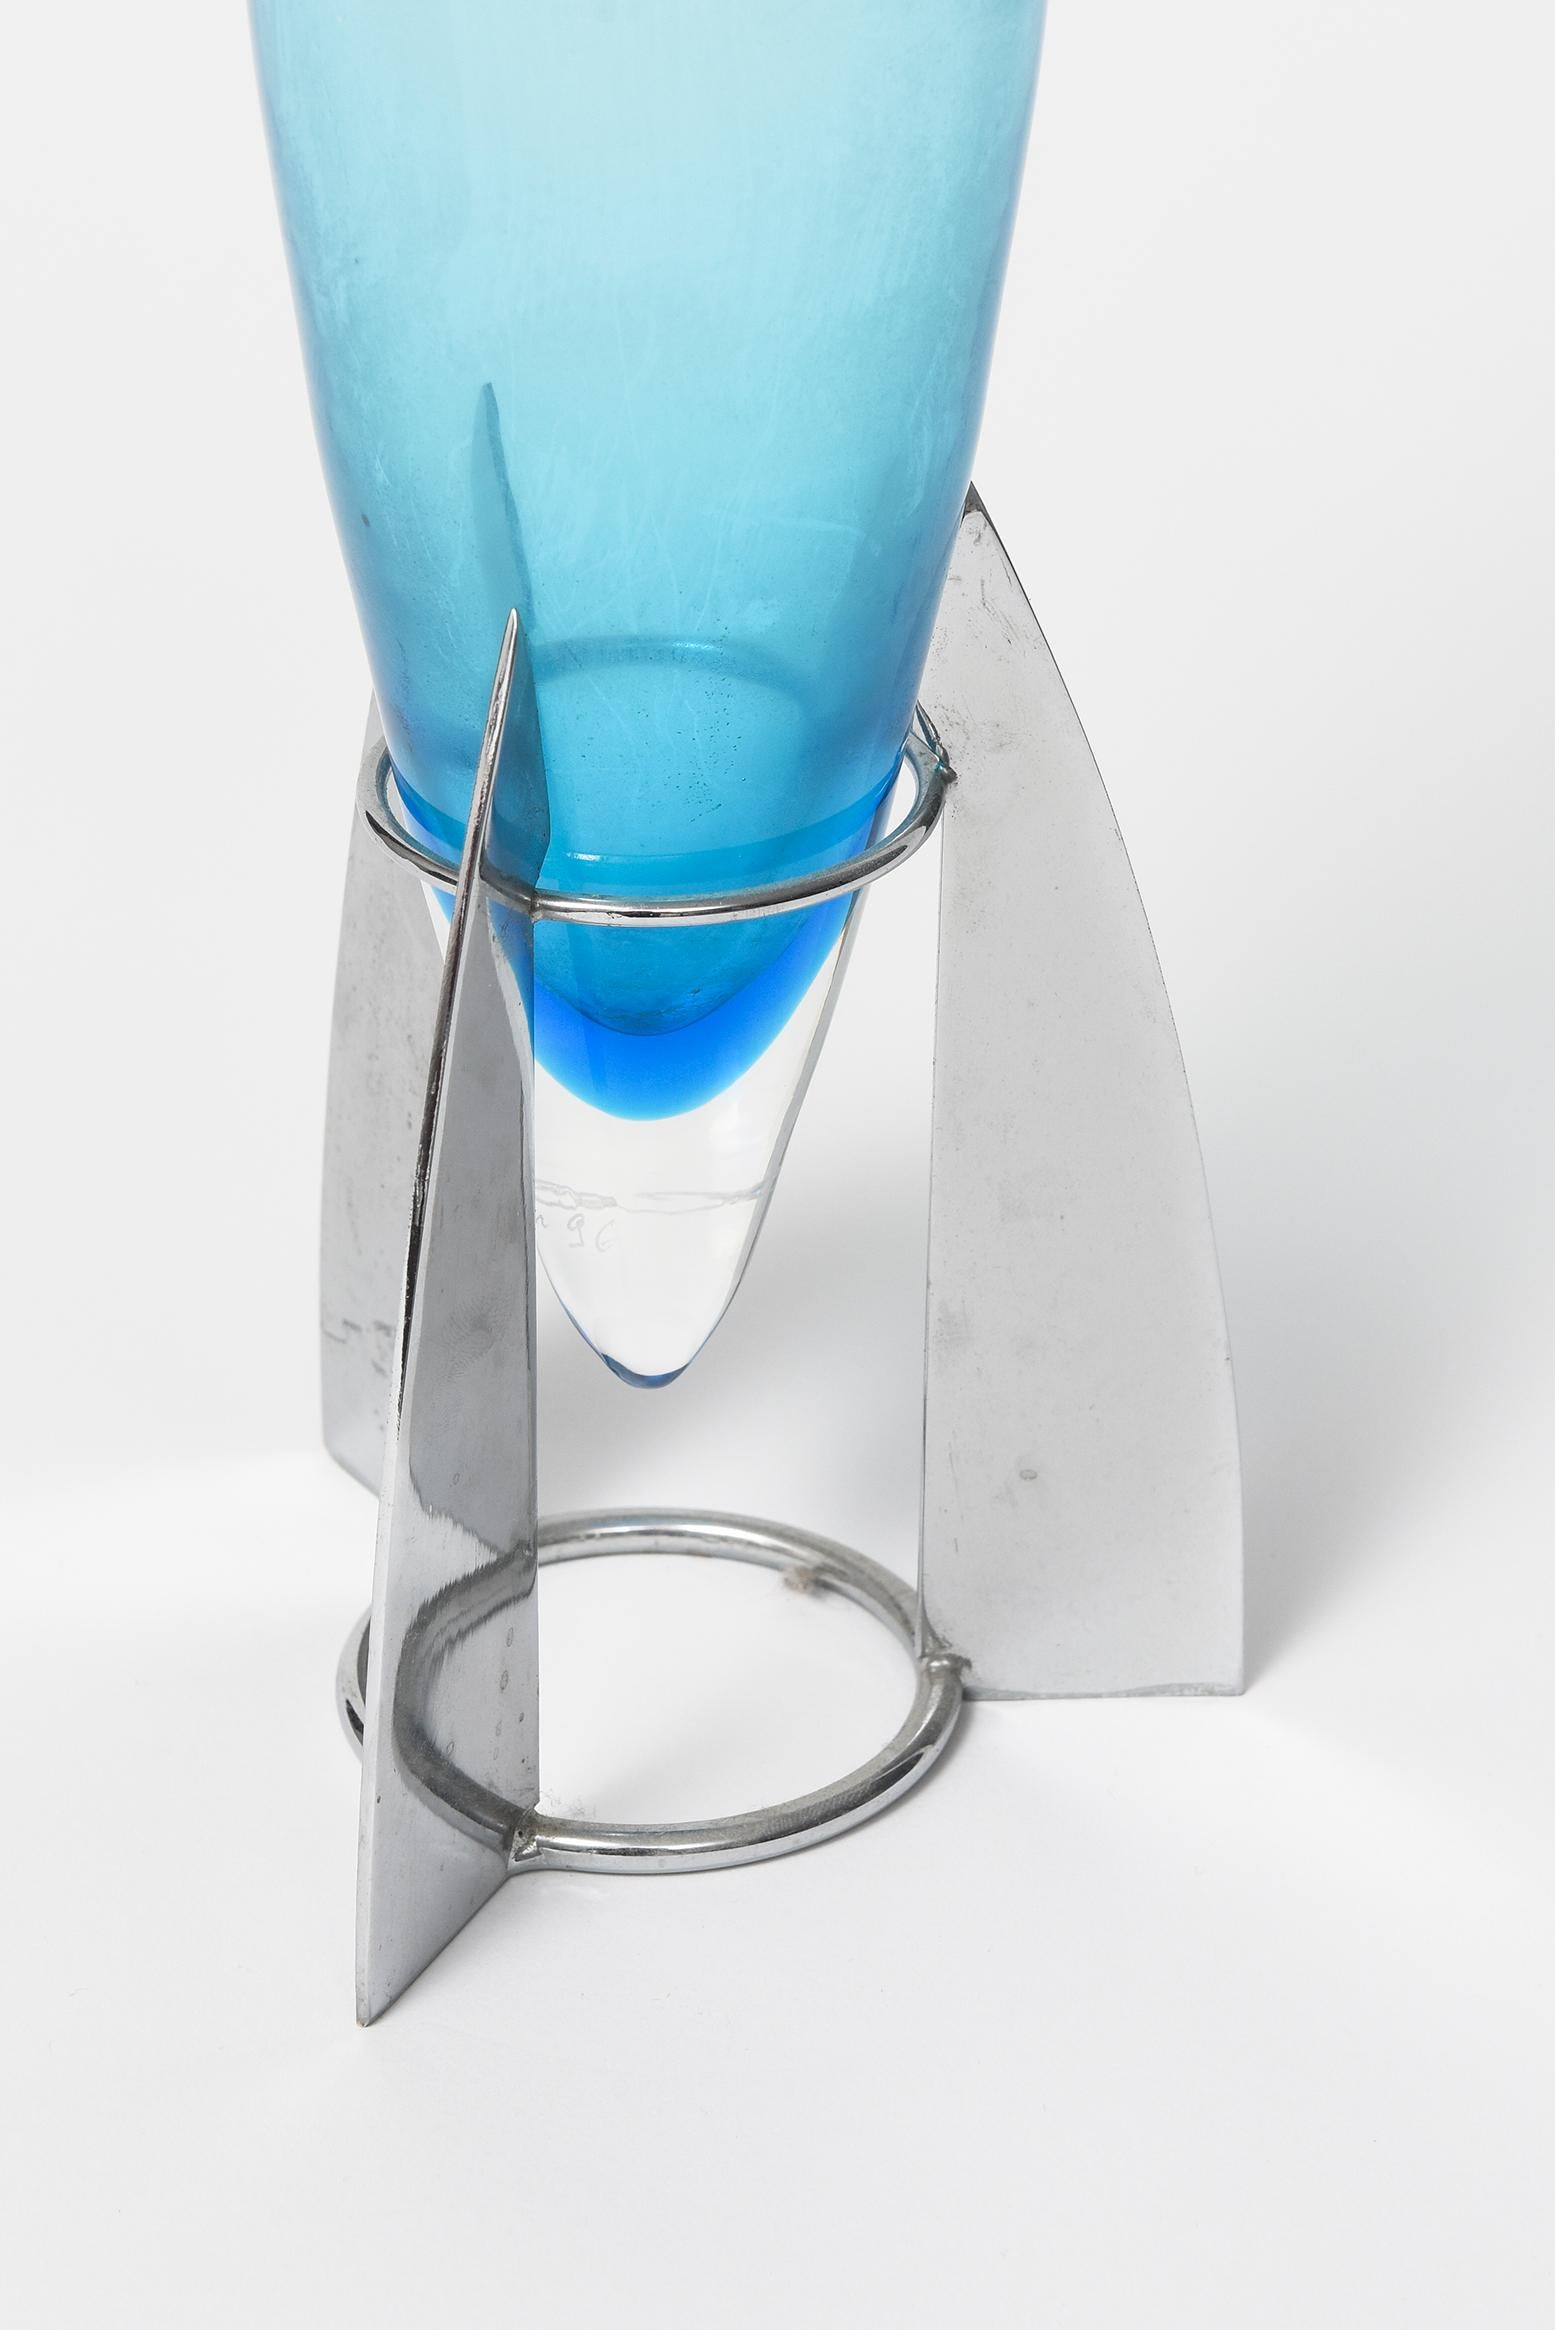 Murano LIP Blue Glass Rocket Vase Designed by Marcello Furlan In Good Condition For Sale In Miami Beach, FL